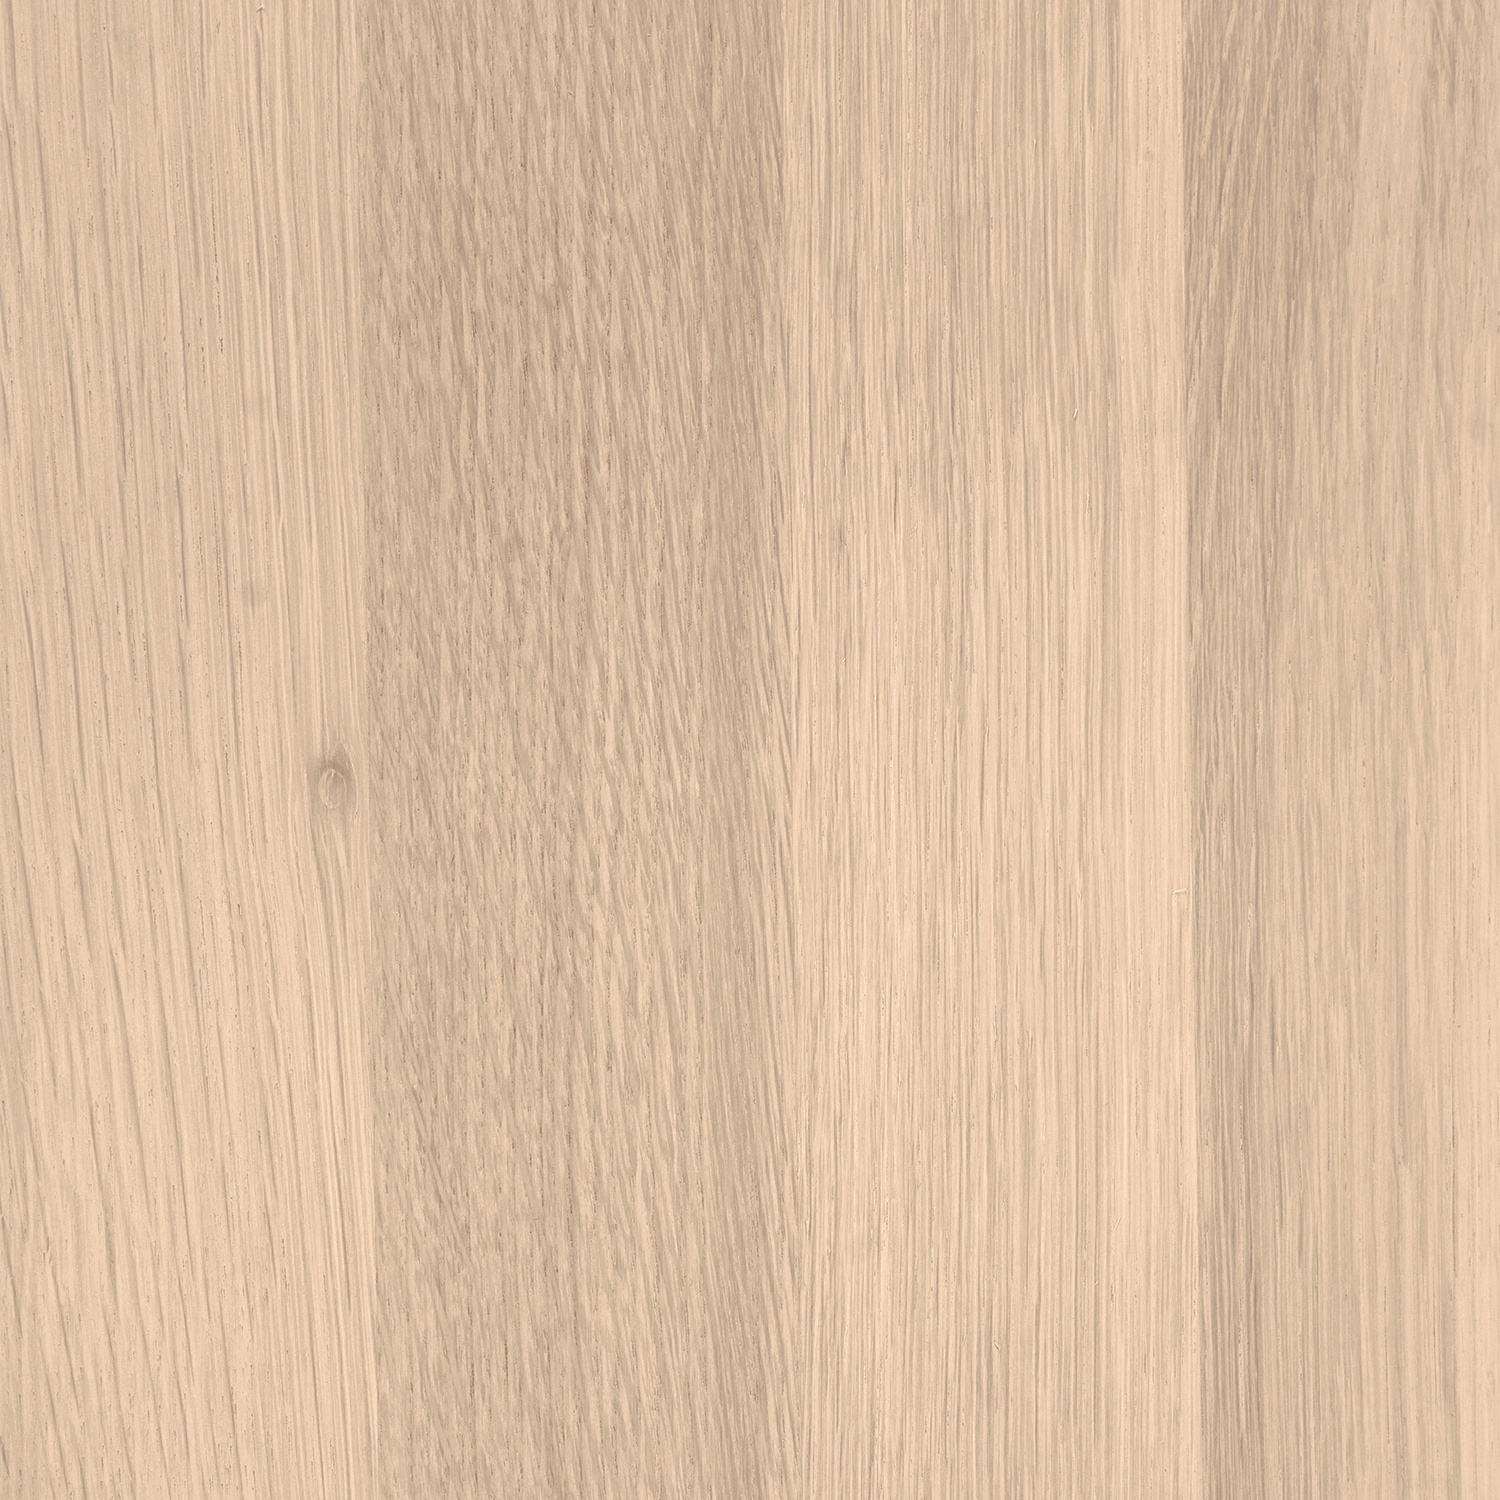  Eiken tafelblad op maat - 2,3 cm dik (1-laag) - foutvrij Europees eikenhout - verlijmd kd 8-12% - 50-120x50-260 cm